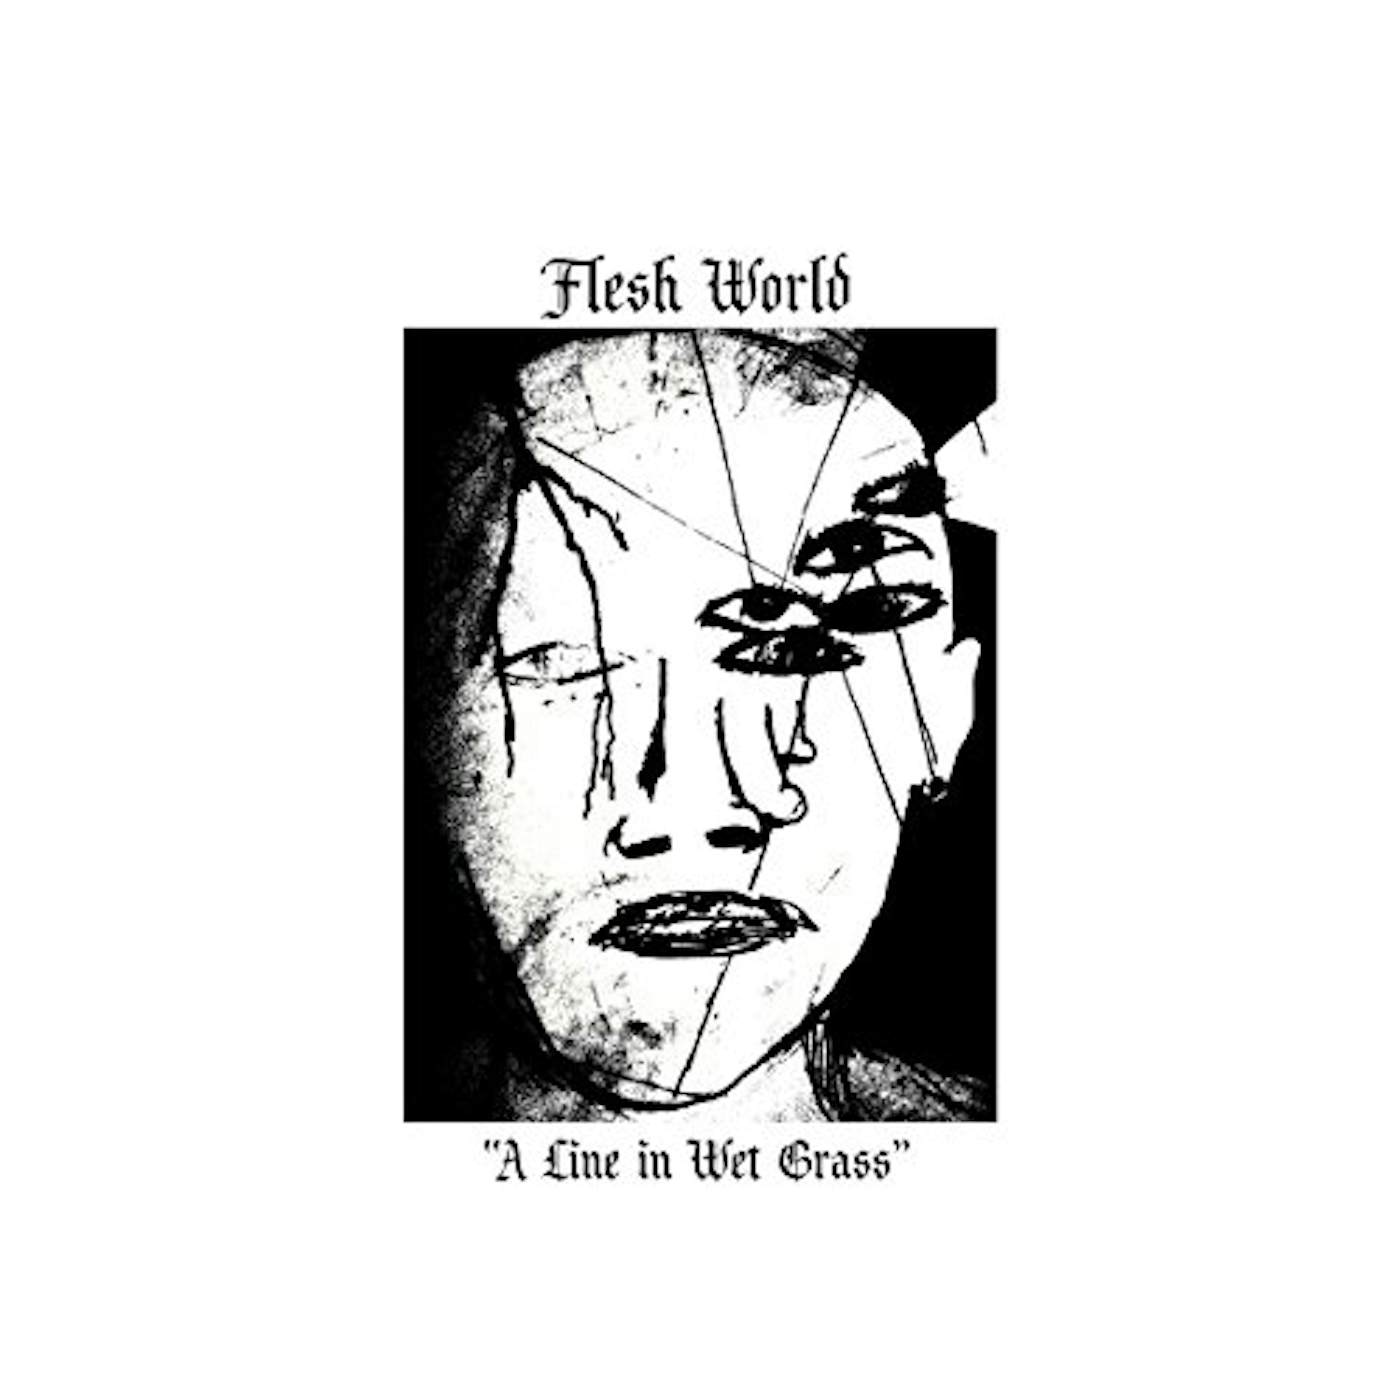 Flesh World LINE IN WET GRASS Vinyl Record